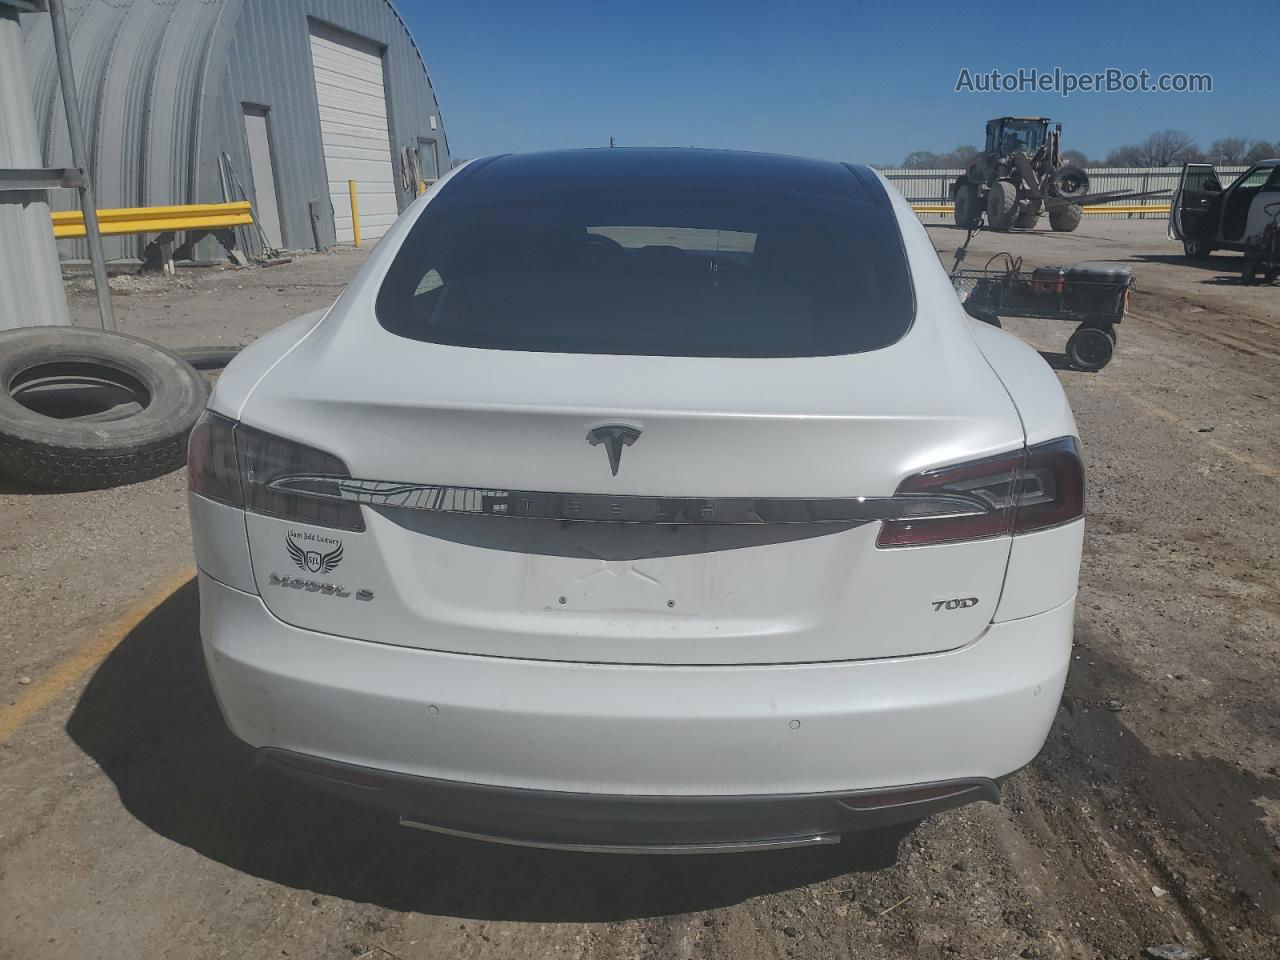 2015 Tesla Model S 70d Белый vin: 5YJSA1S20FF087872